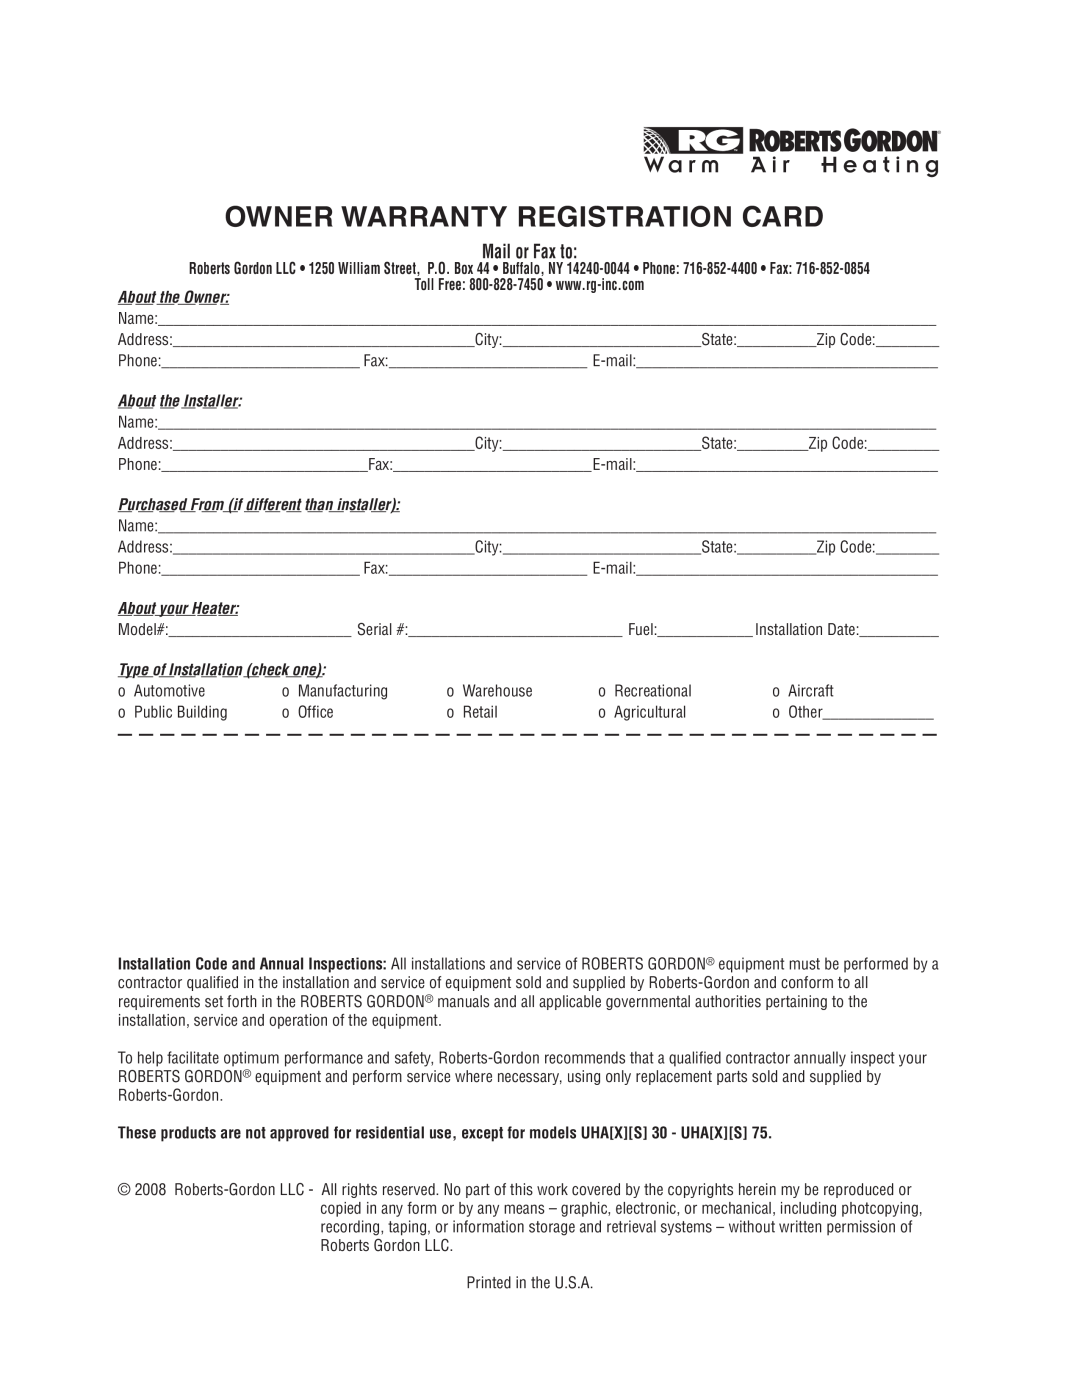 Roberts Gorden 60, 75 Owner Warranty Registration Card, W a r m, A i r H e a t i n g, About the Owner, About the Installer 